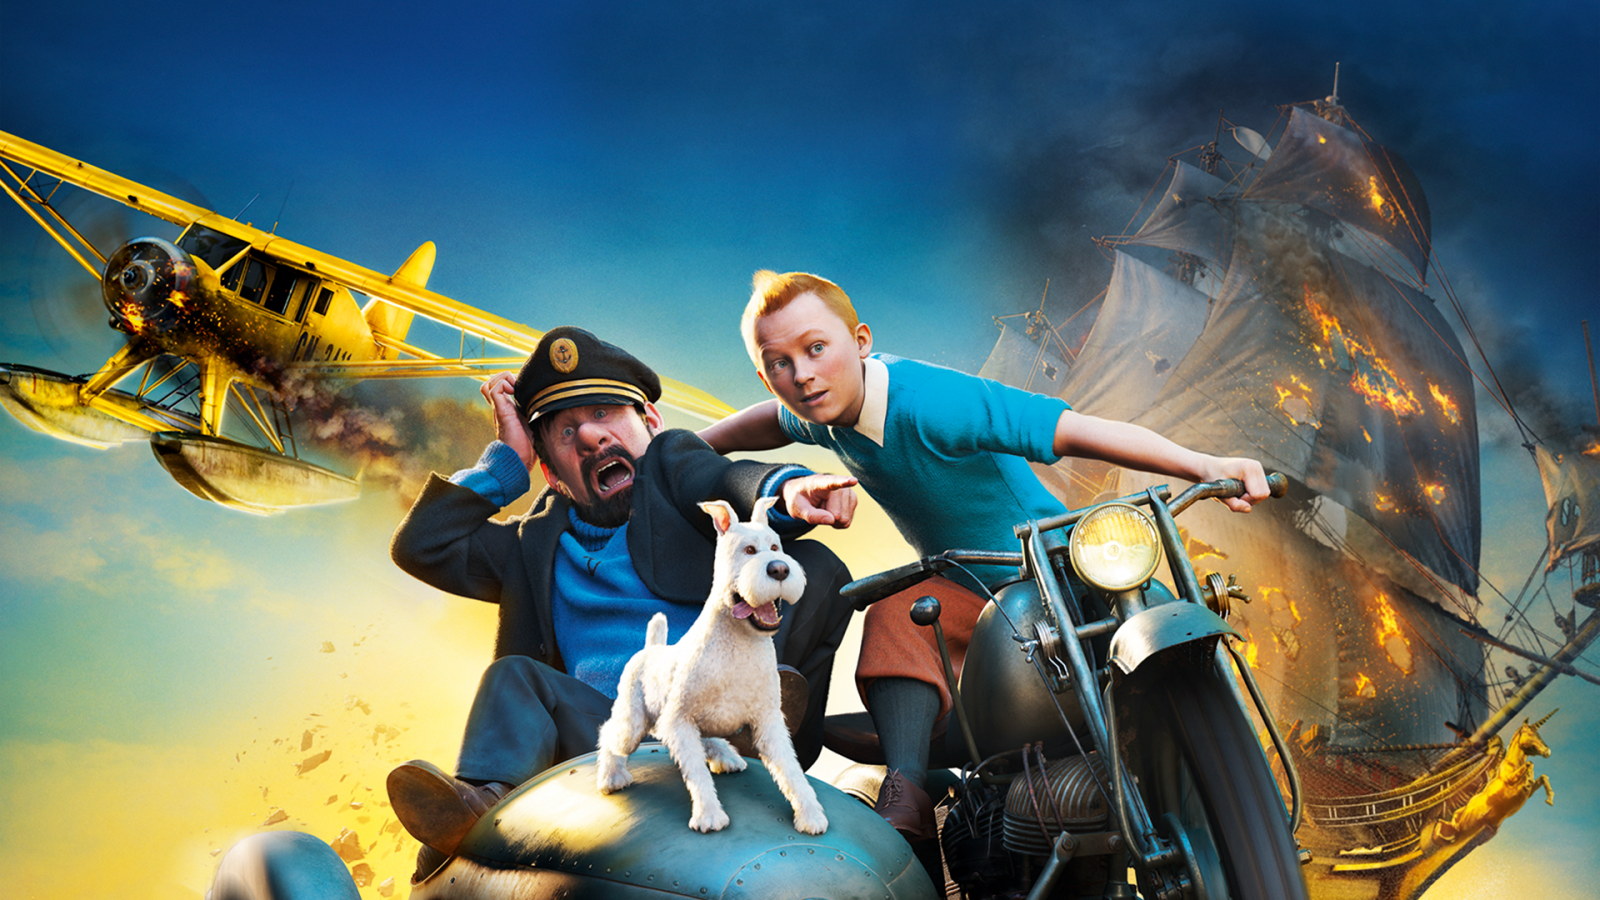 PS3 - the Adventures of Tintin: secret of the unicorn